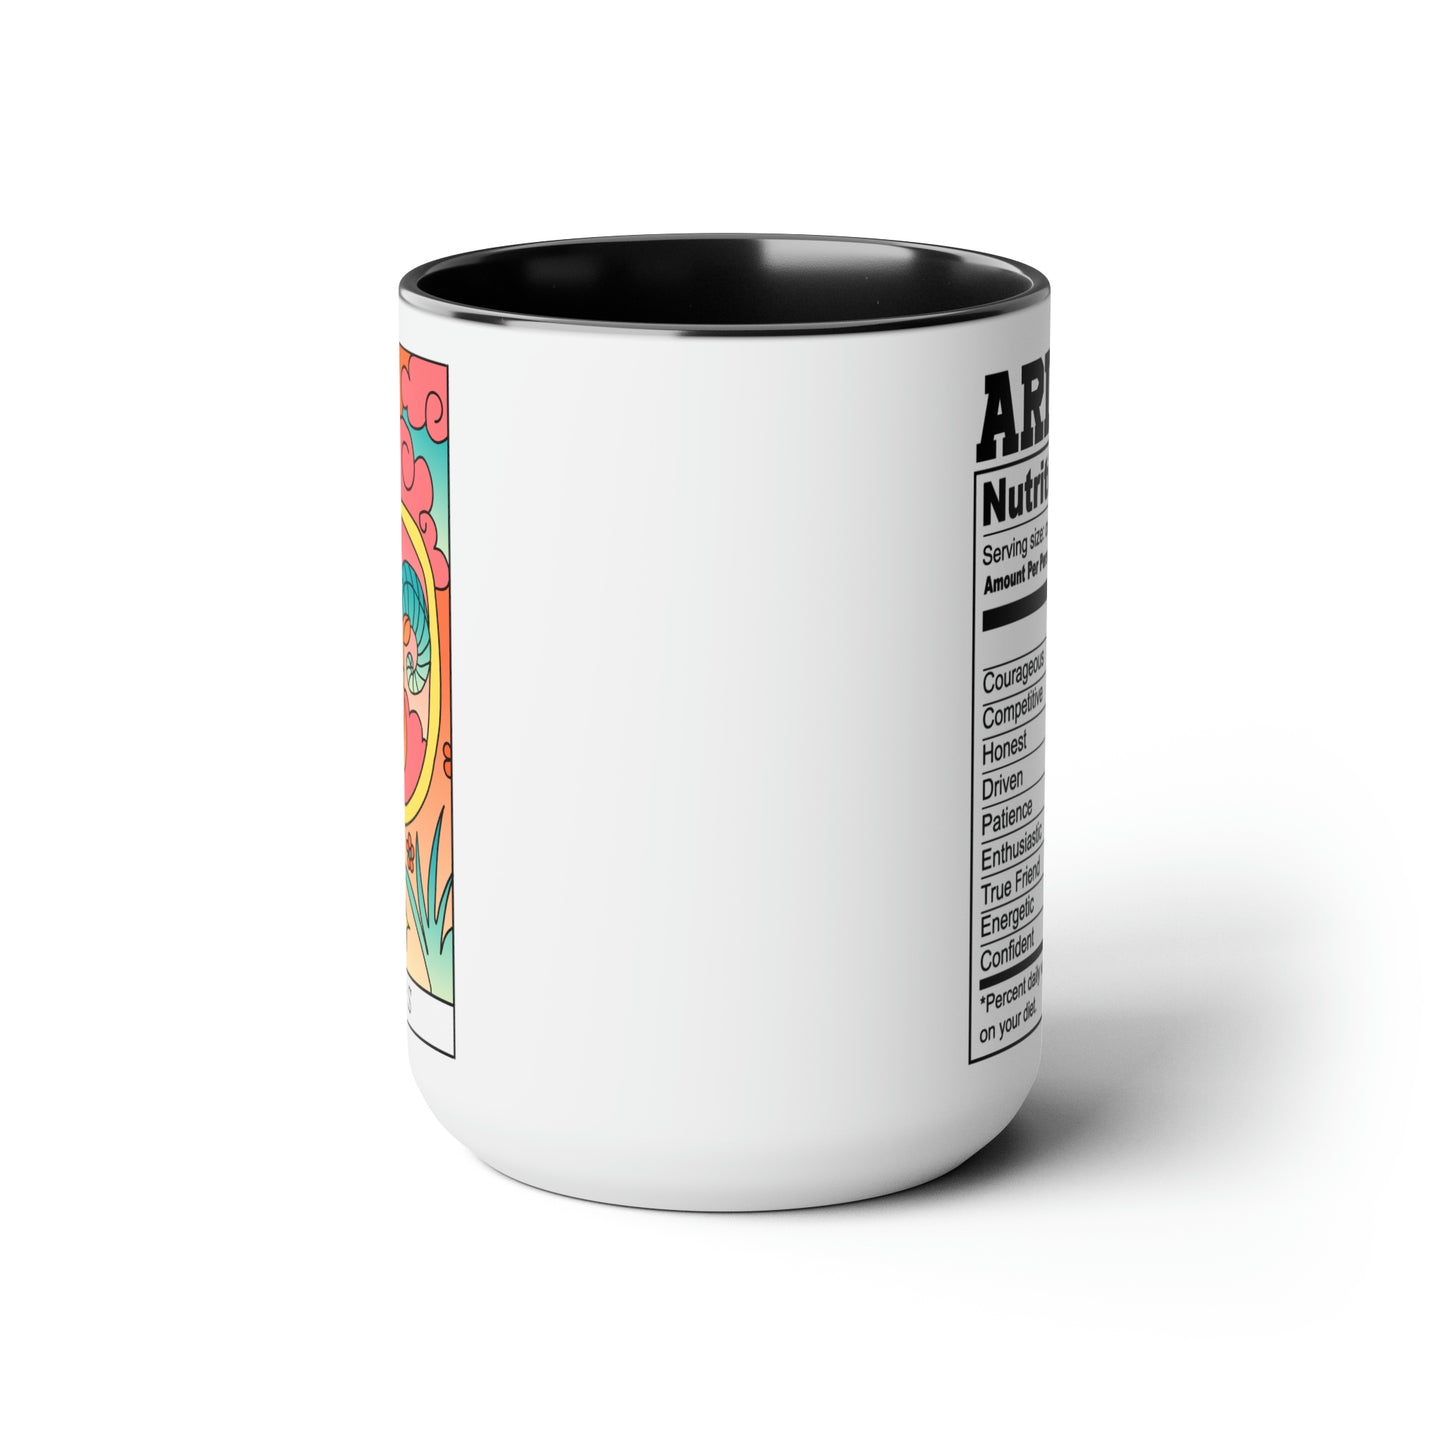 Aries Tarot Card Coffee Mug - Double Sided Black Accent Ceramic 15oz by TheGlassyLass.com